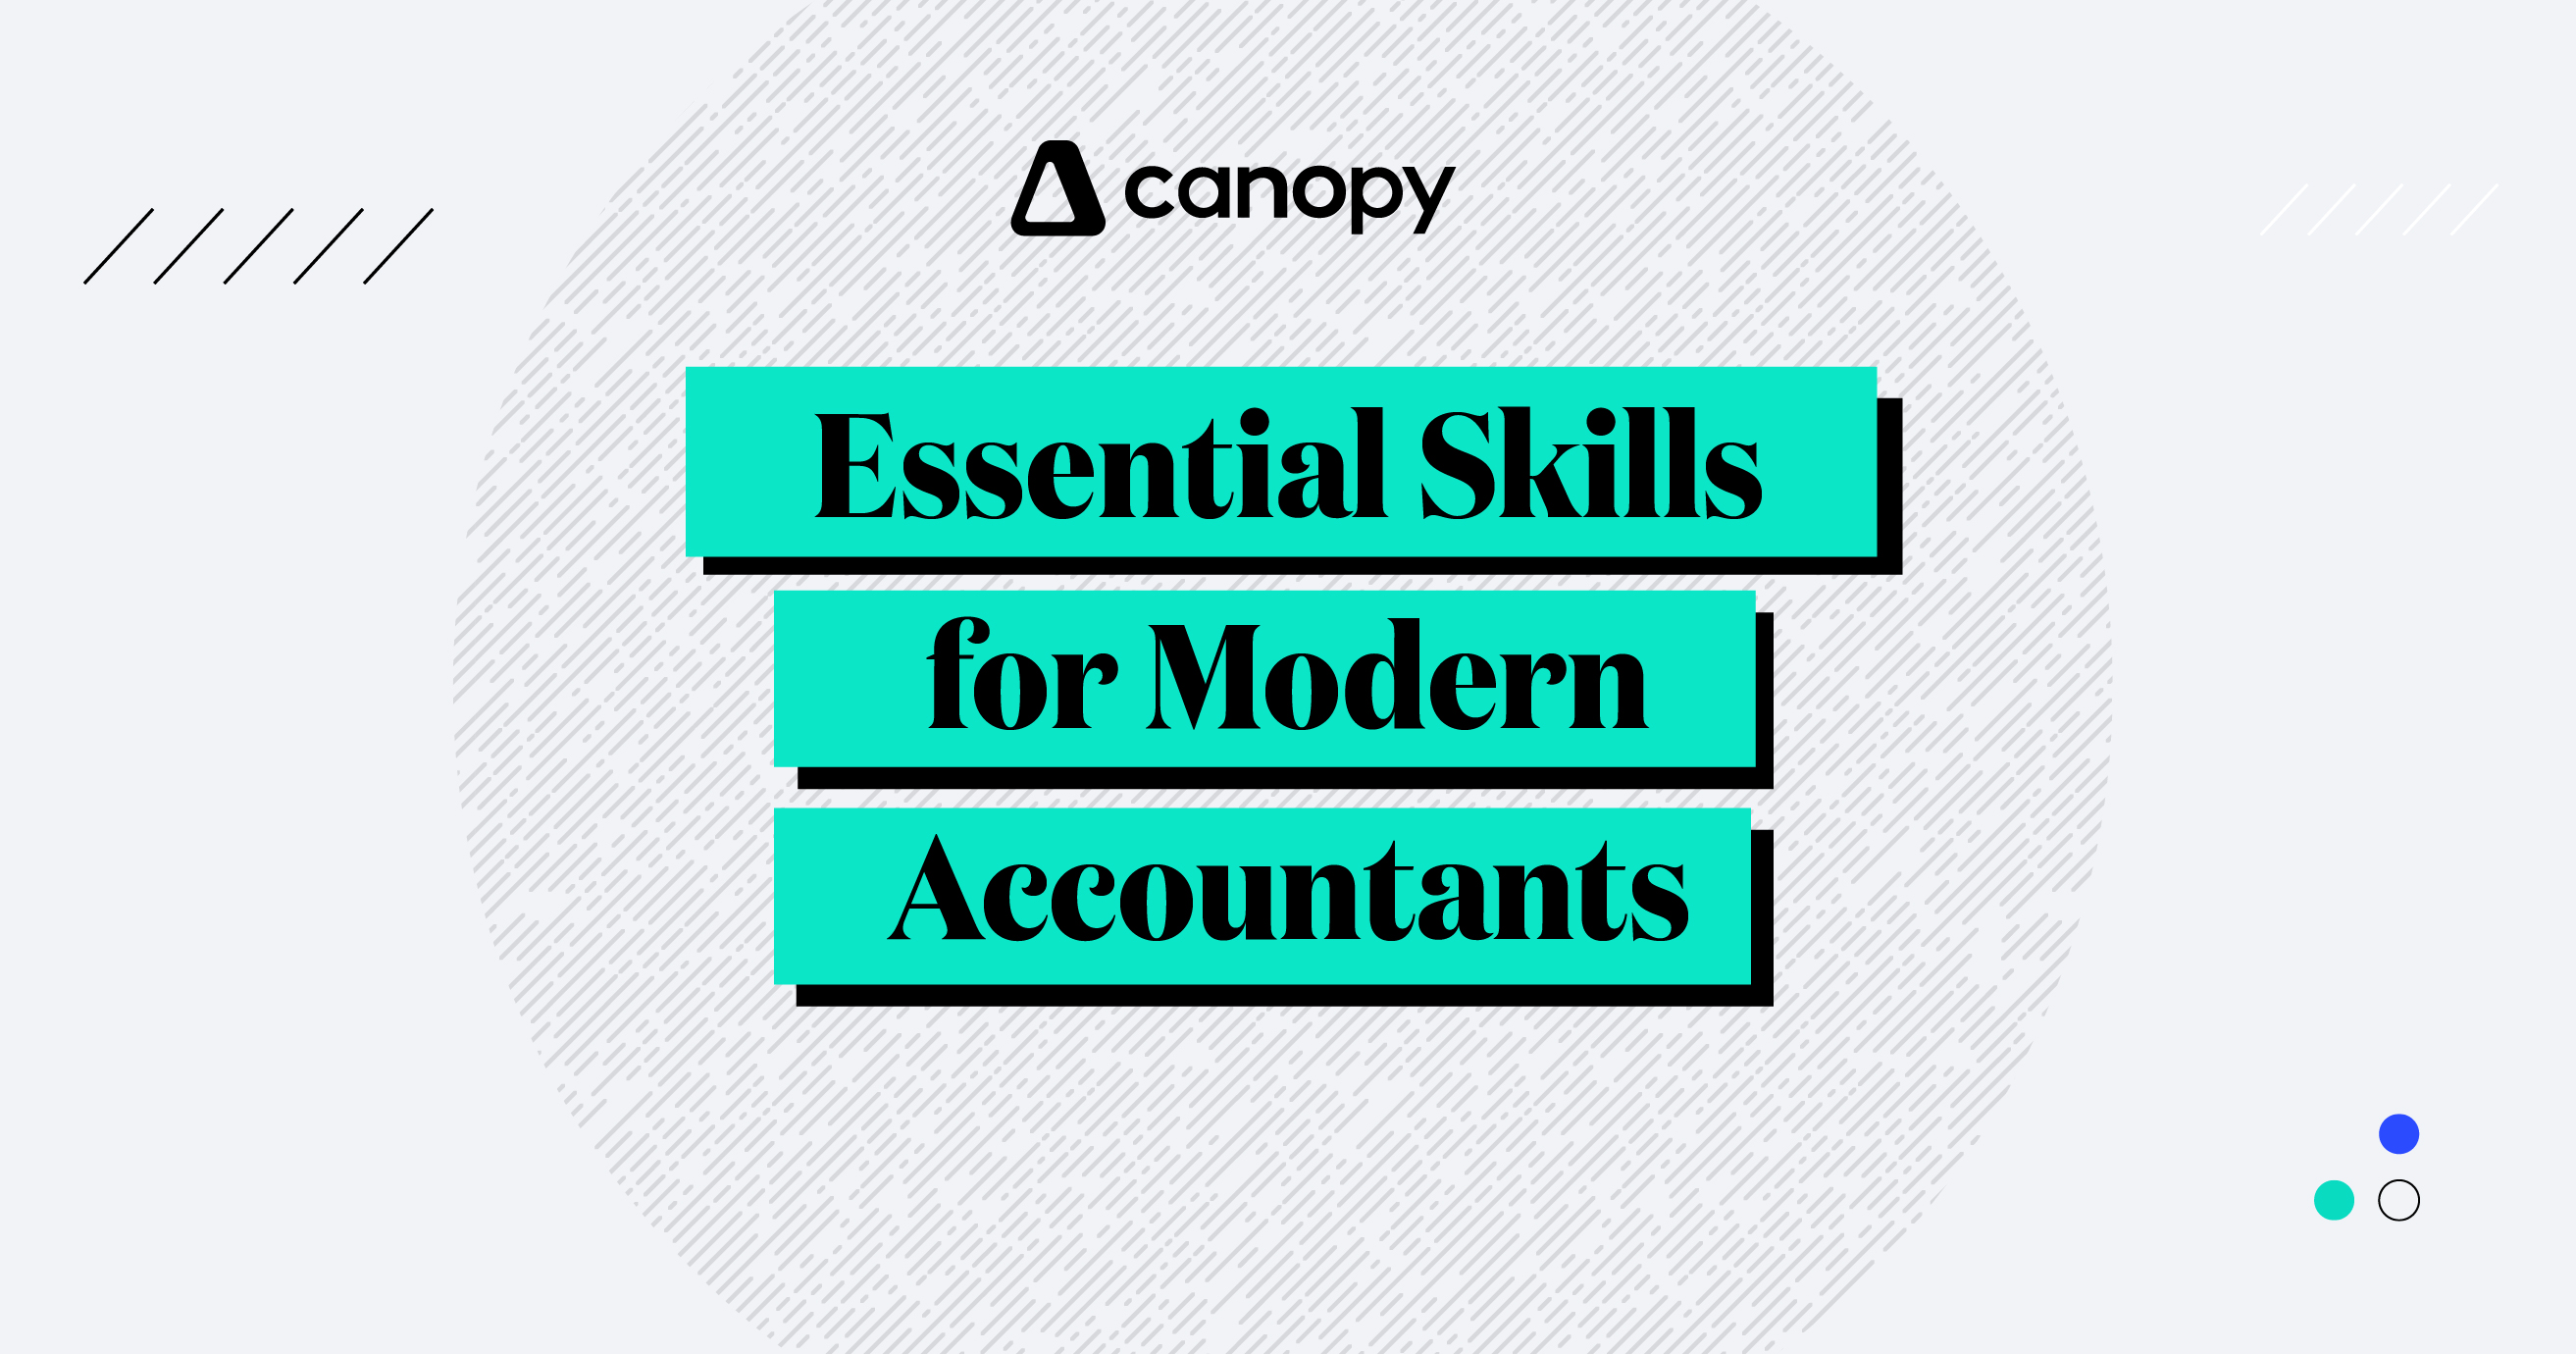 Essential Skills for Modern Accountants